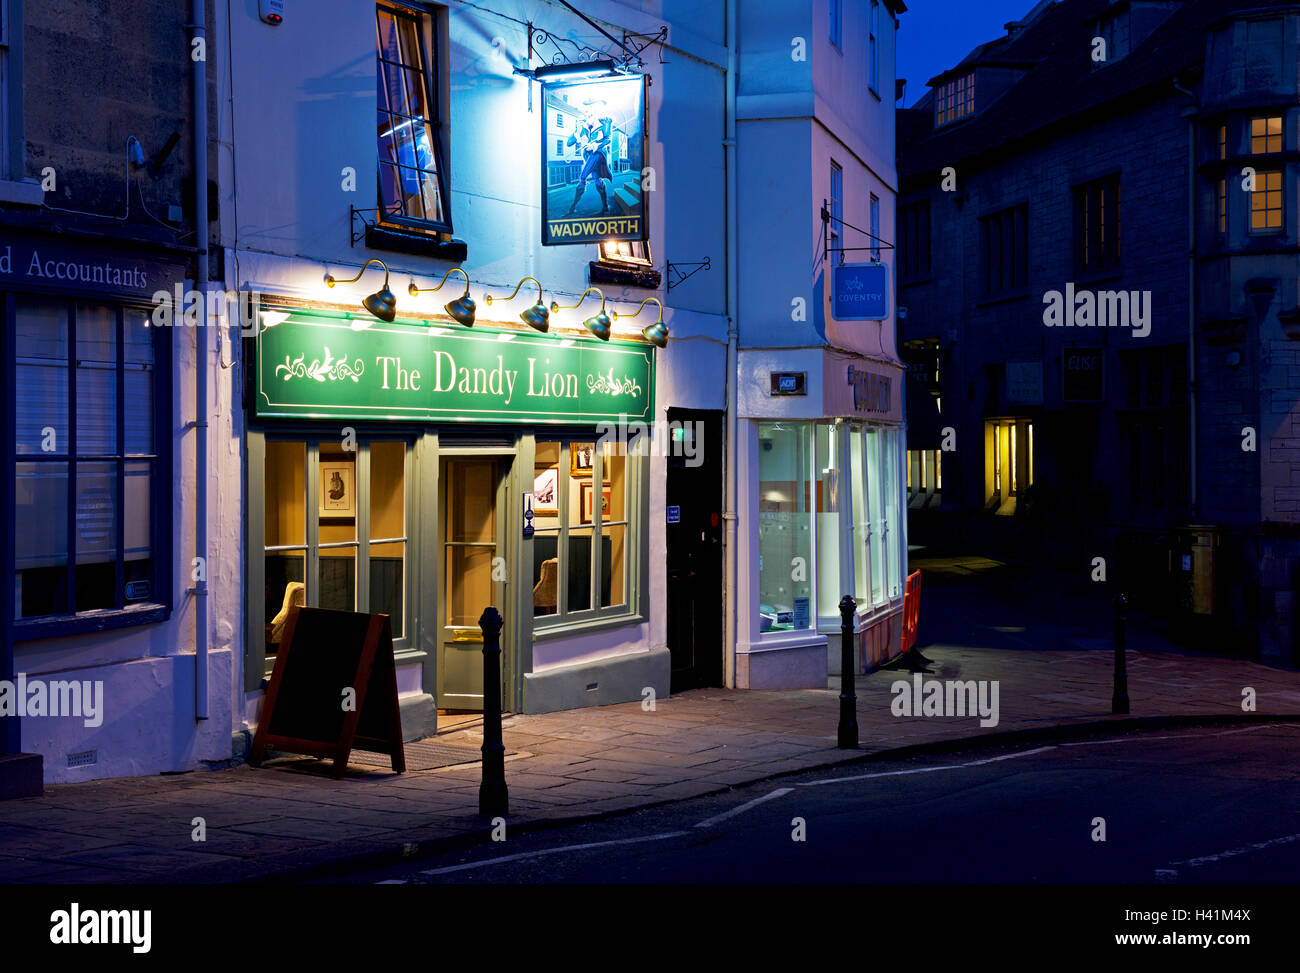 The Dandy Lion pub at night, Bradford-on-Avon, Wiltshire, England UK Stock Photo